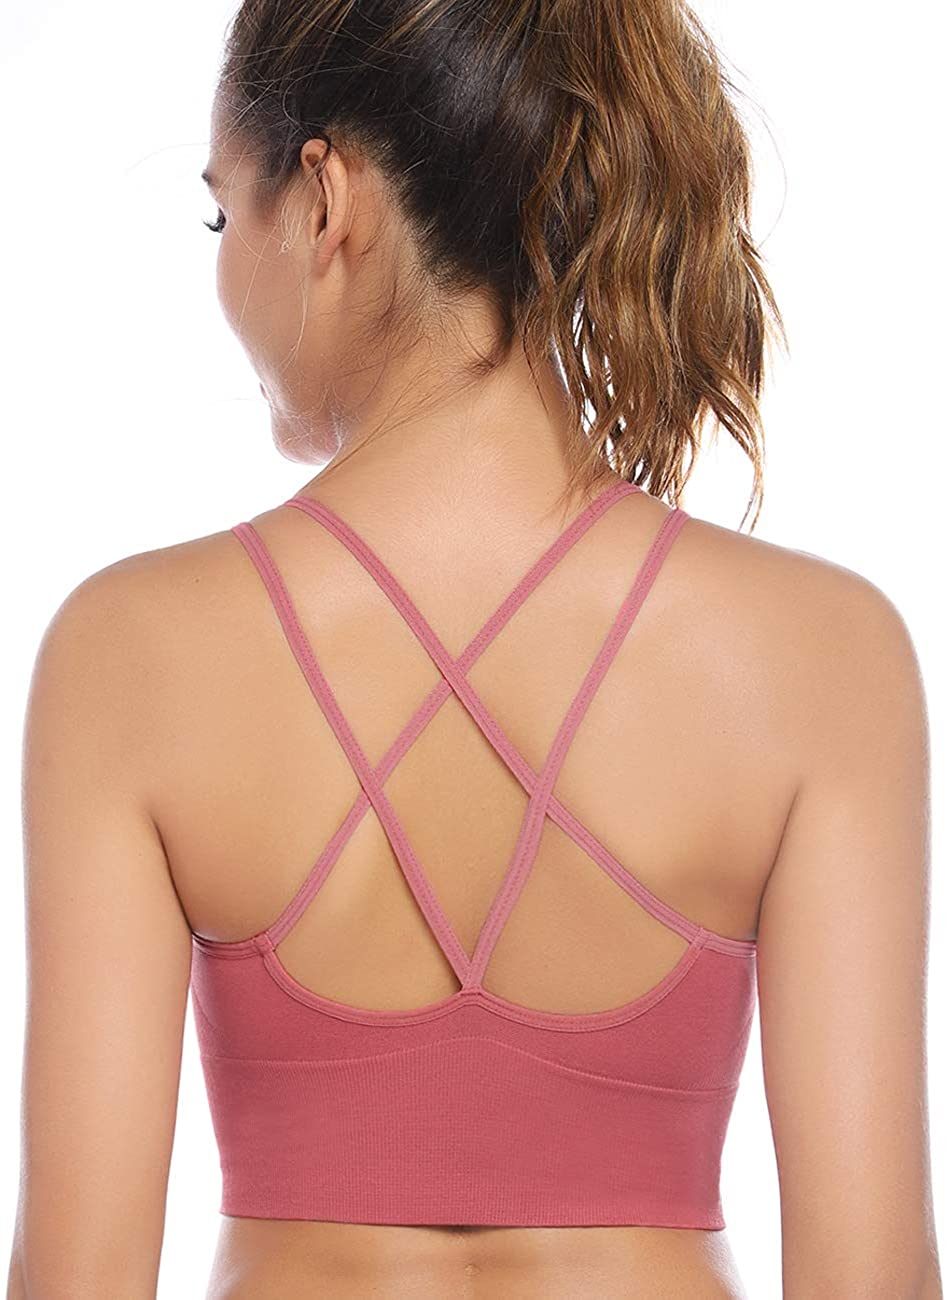 Buy Sykooria 3 Pack Strappy Sports Bra for Women Sexy Crisscross